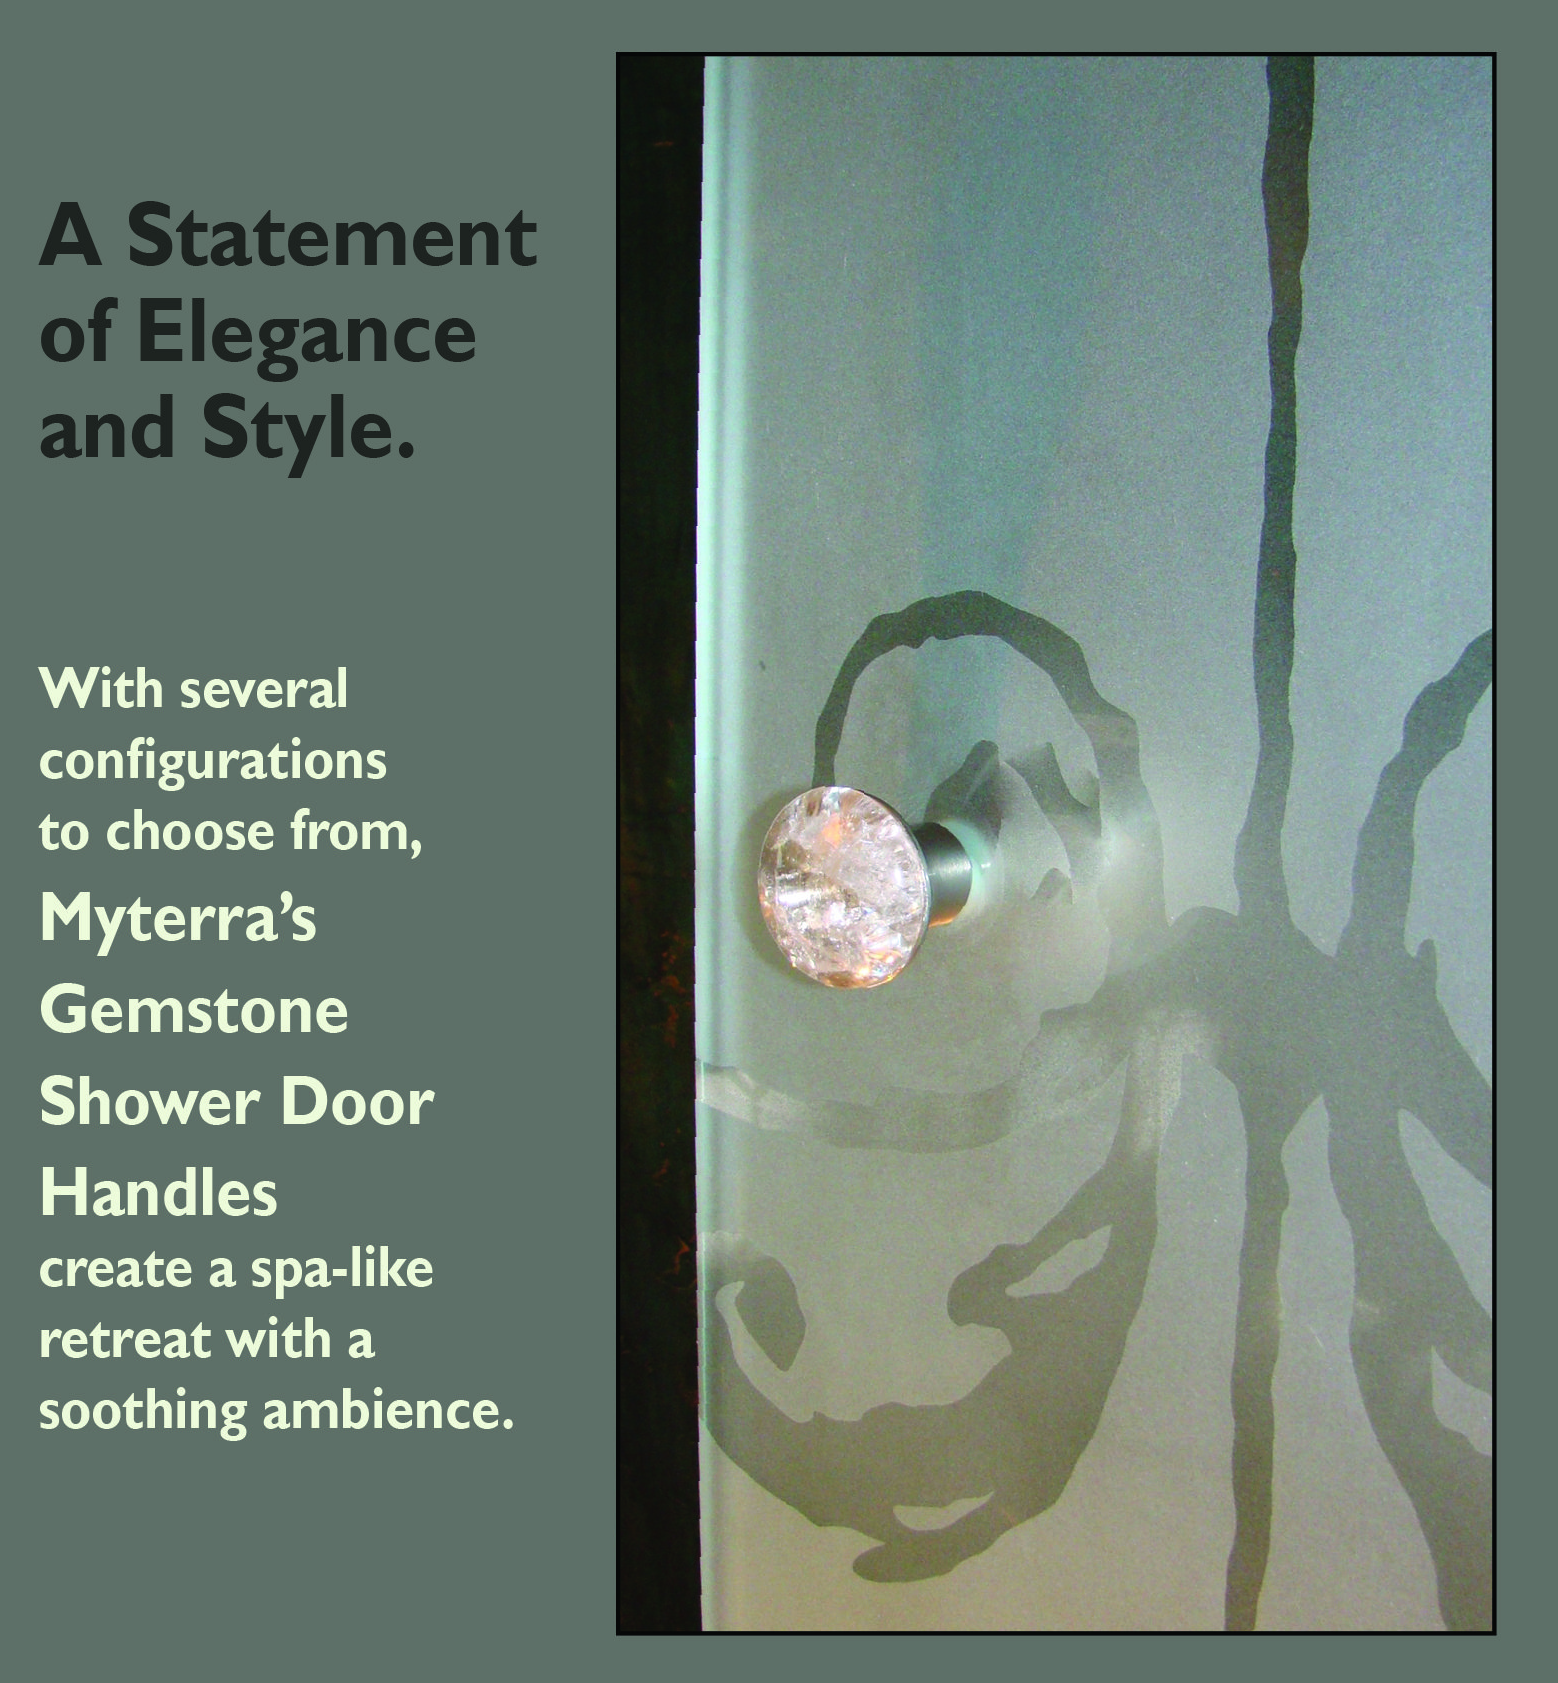 Myterra Gemstone Hardware Shower Knobs are a statement of elegance & style